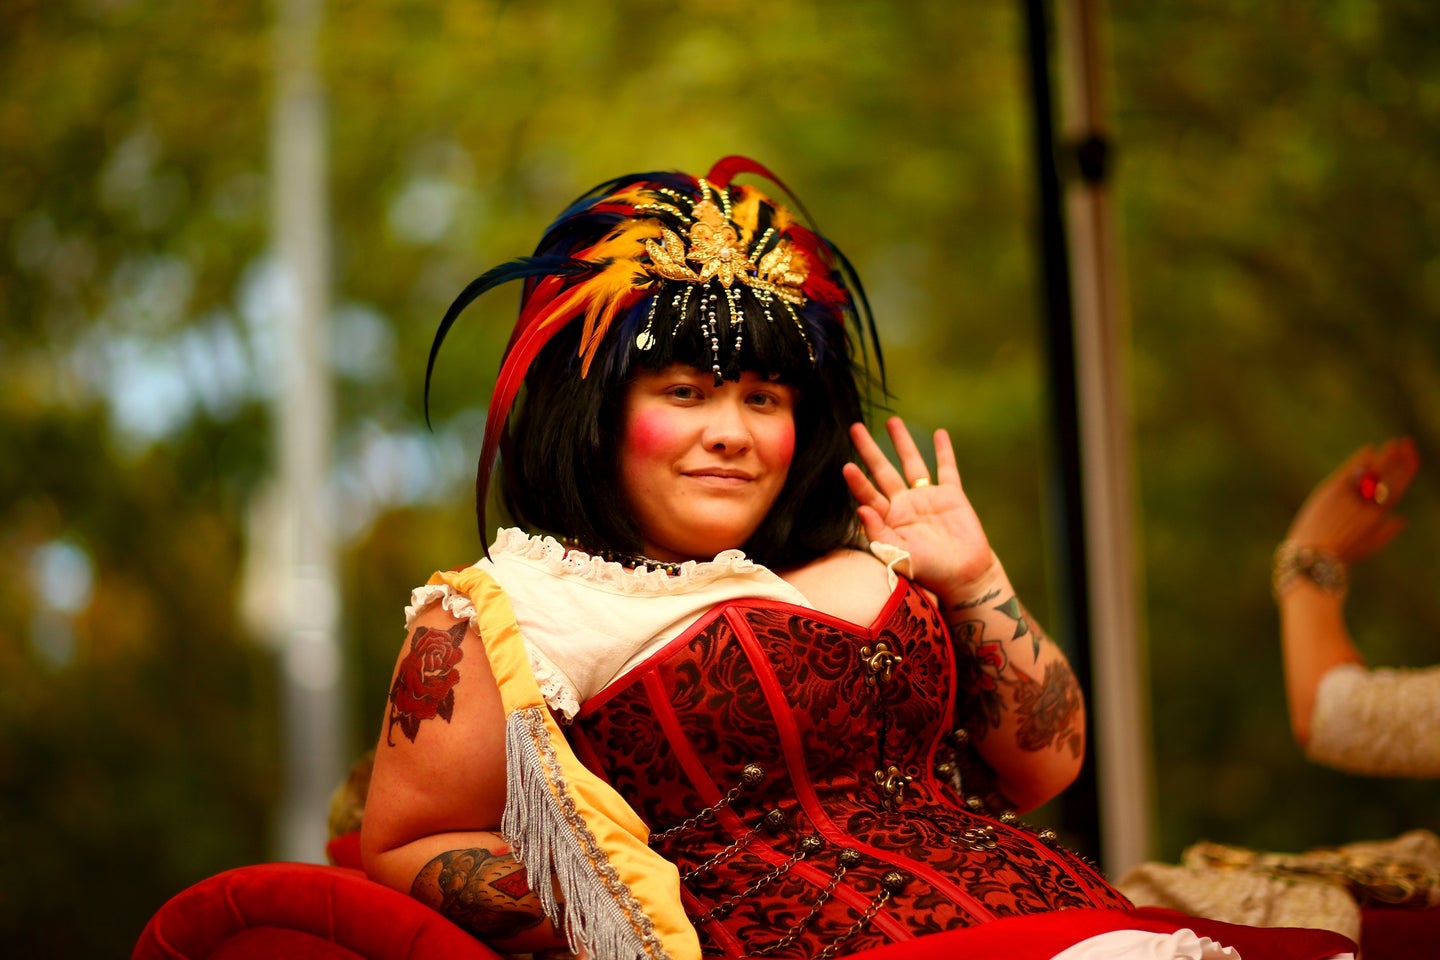 Faafafine individual at Auckland, New Zealand pride parade